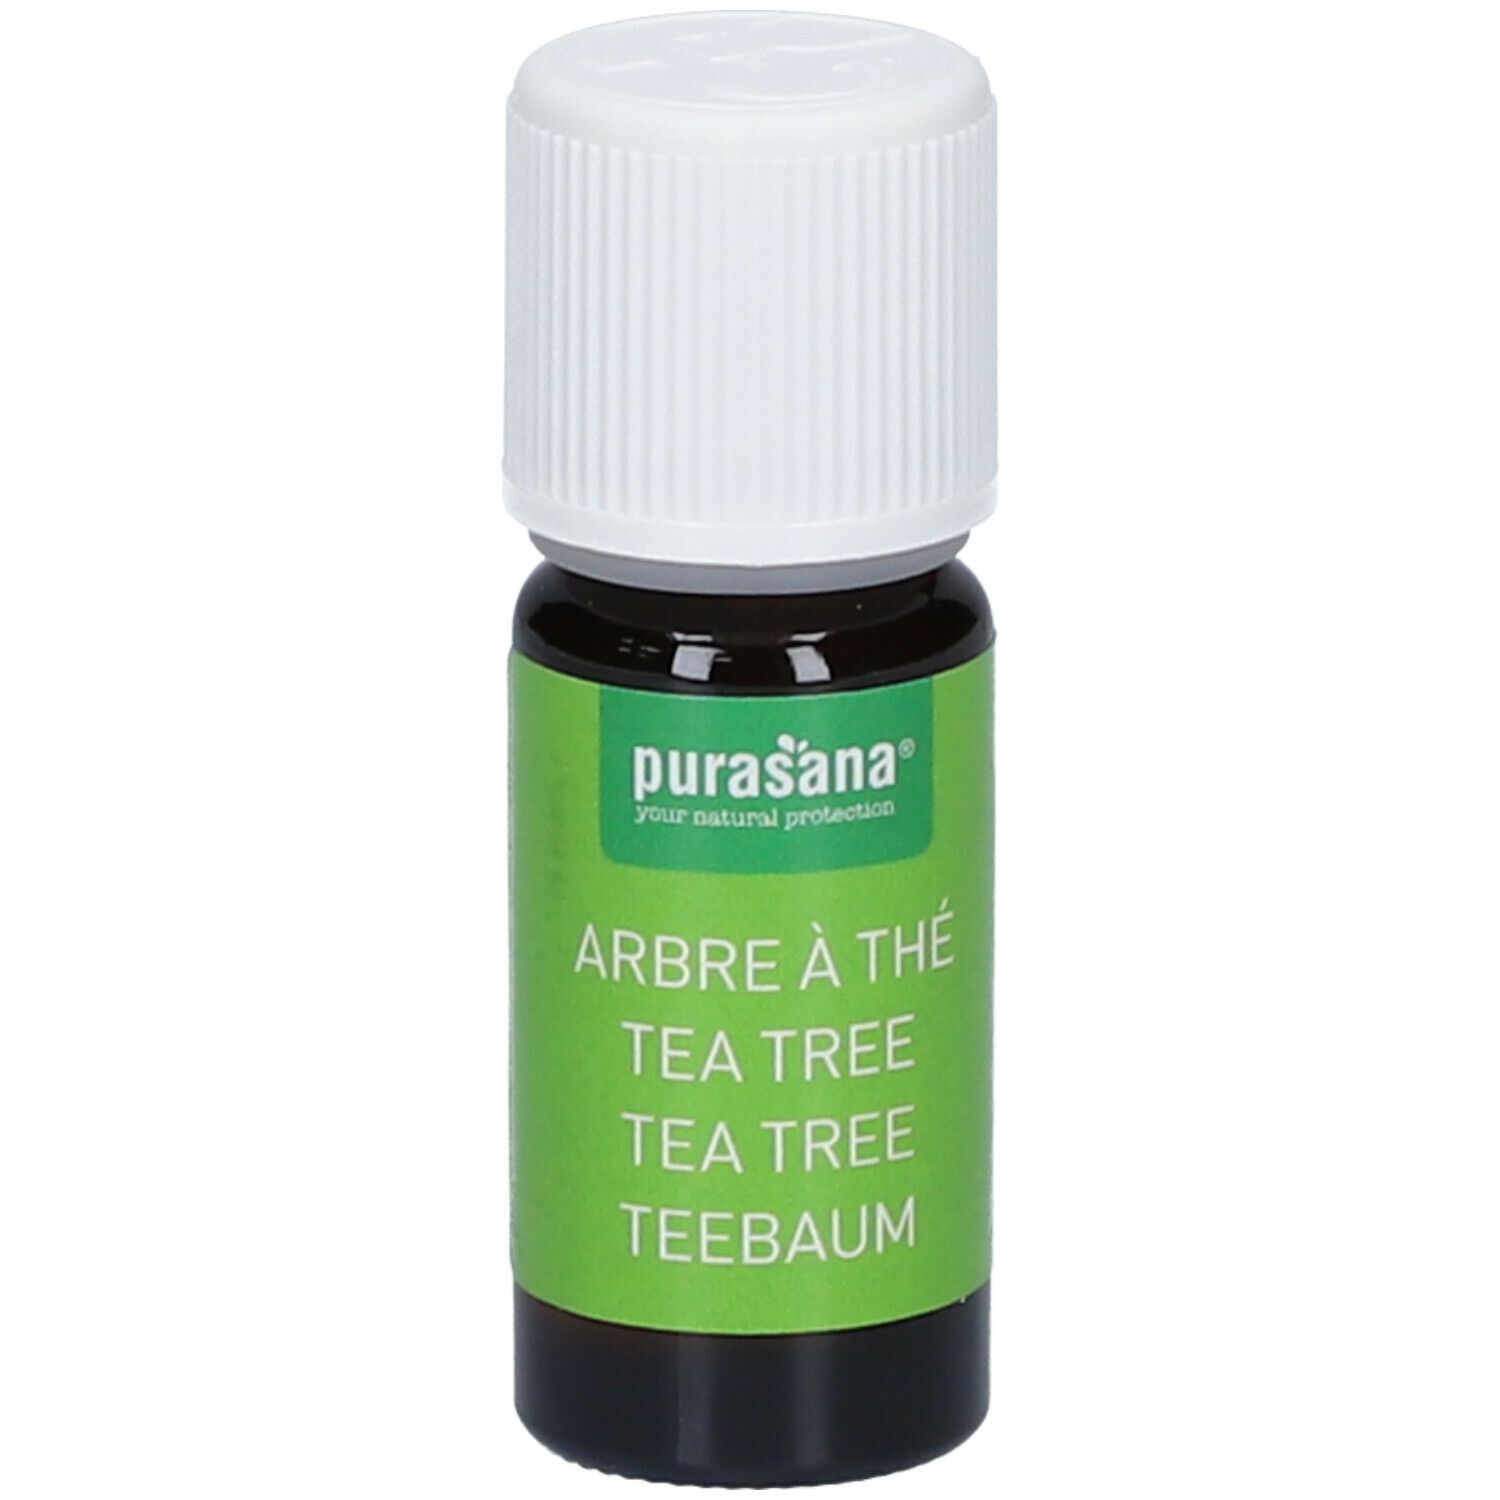 Purasana Huile tea tree 10 ml